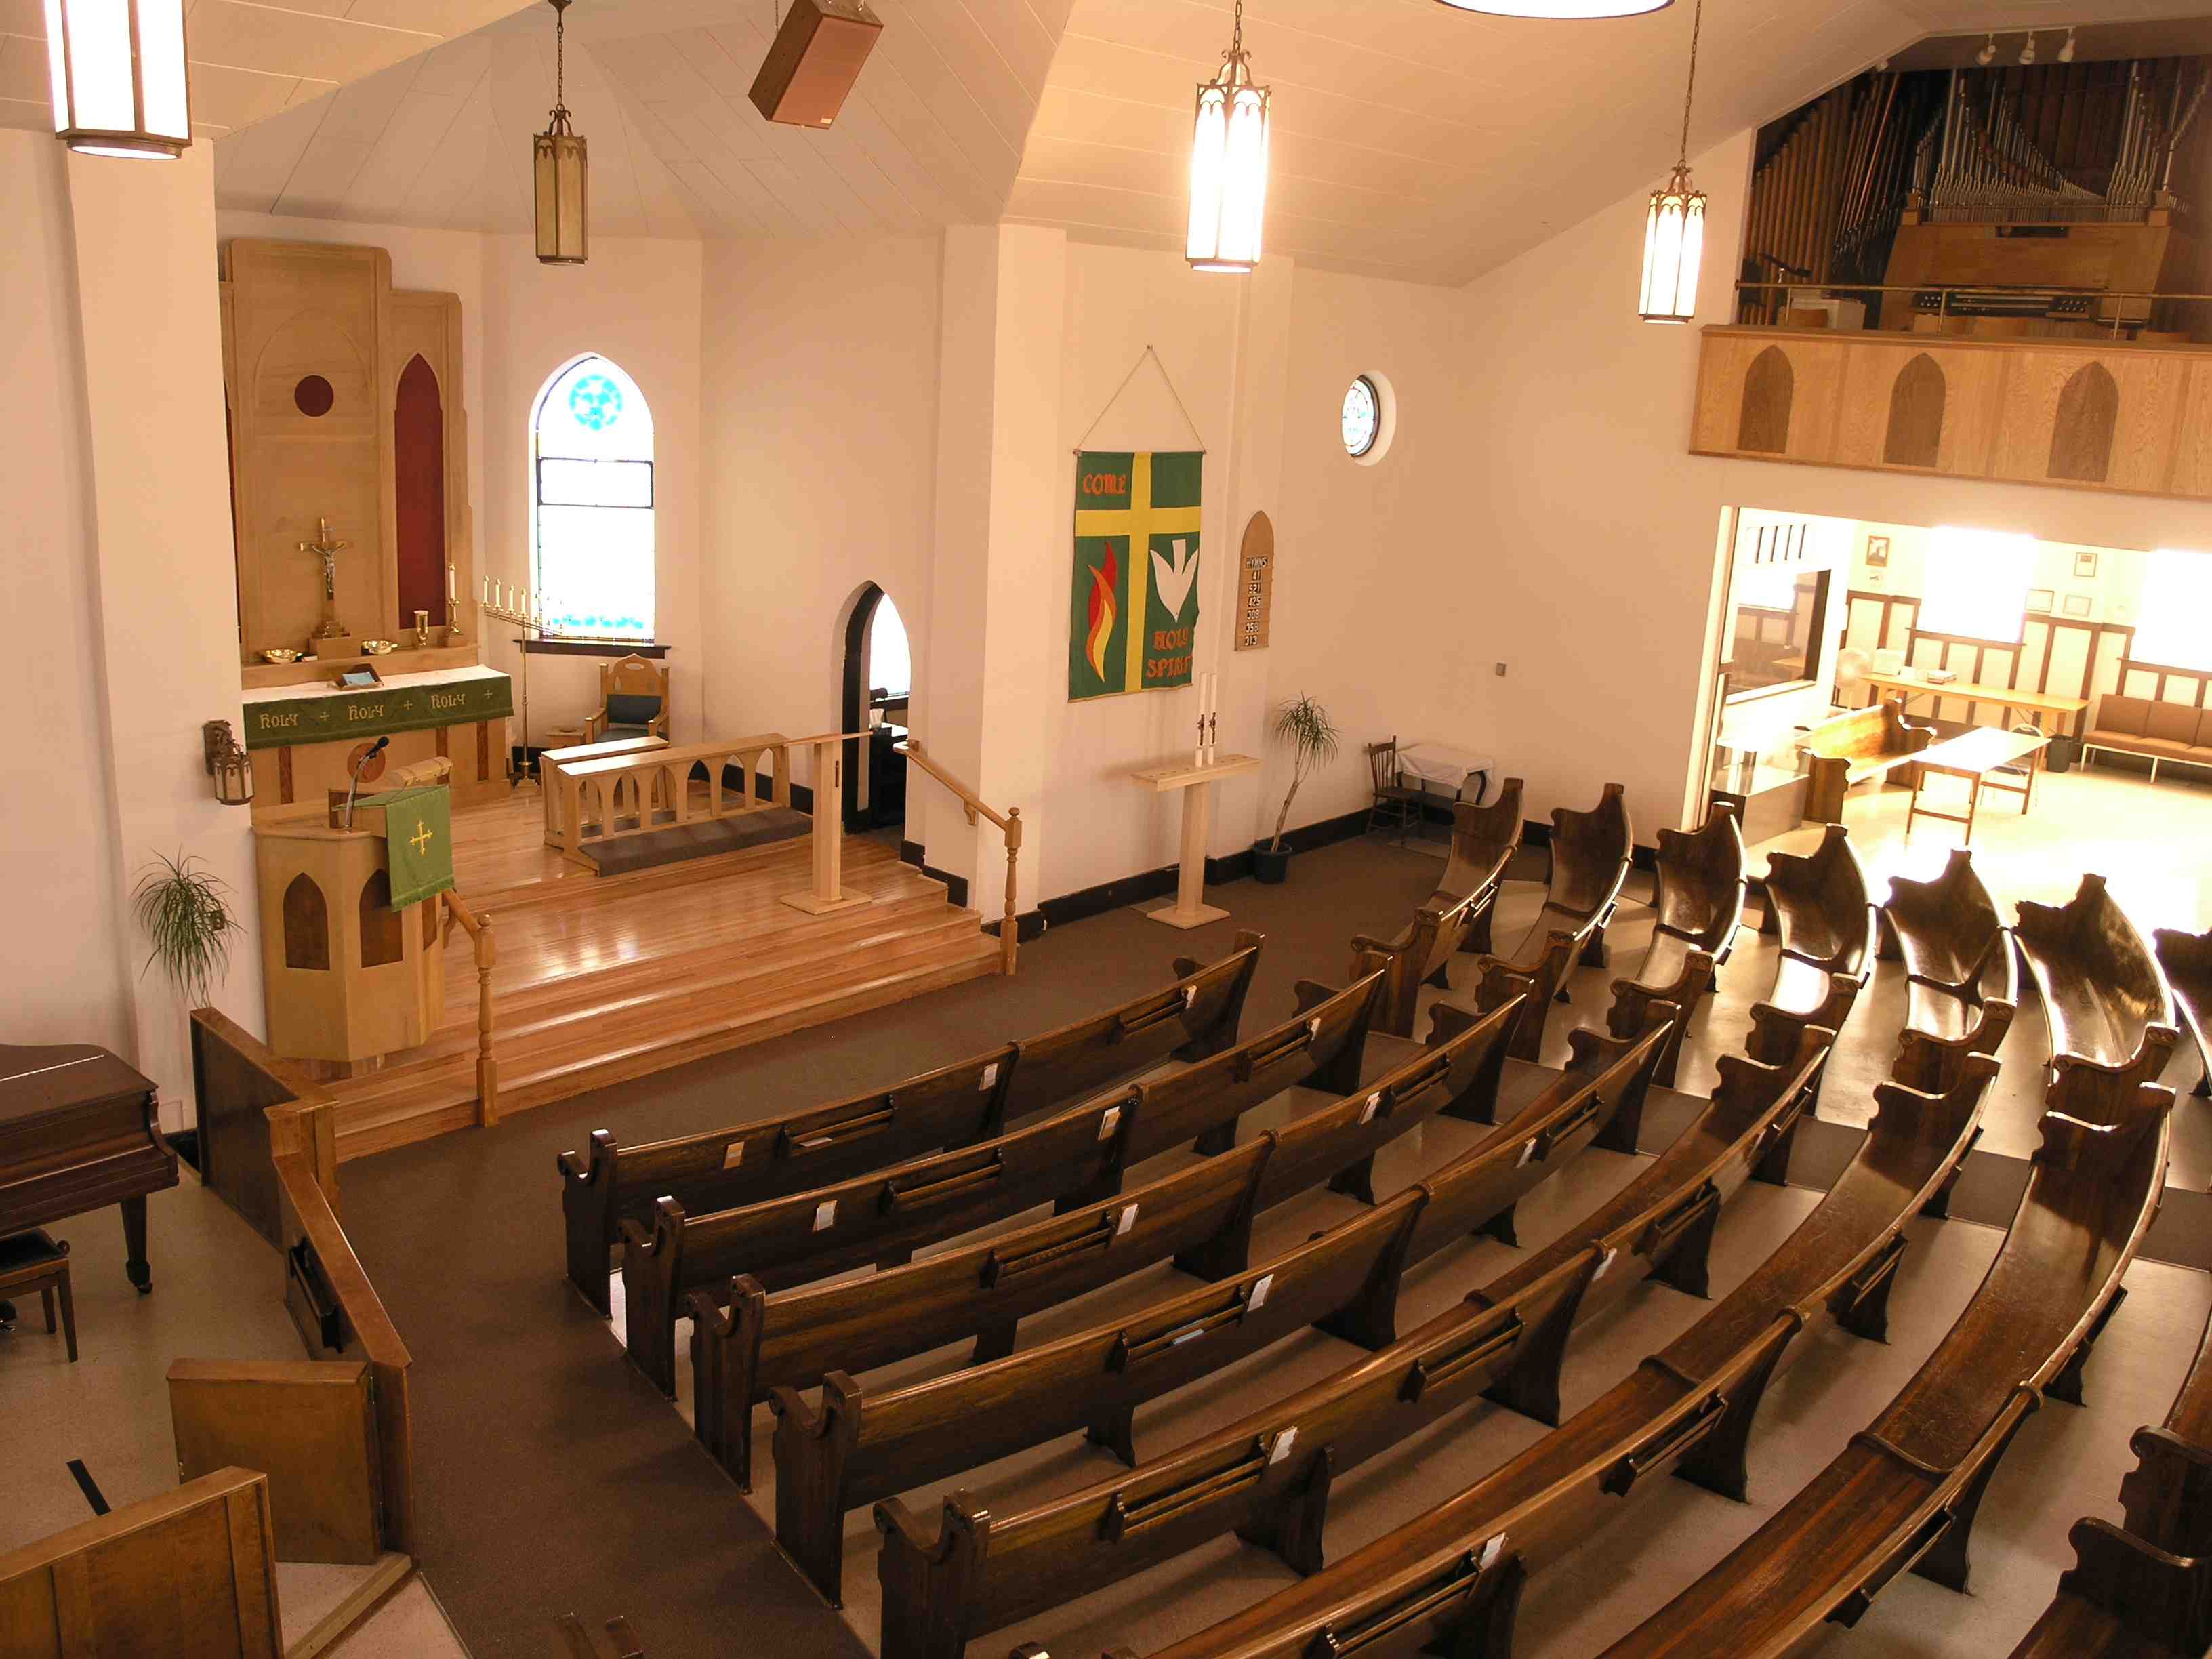 St. Matthew Lutheran Church Calgary, Alberta Source: Congregational Website.